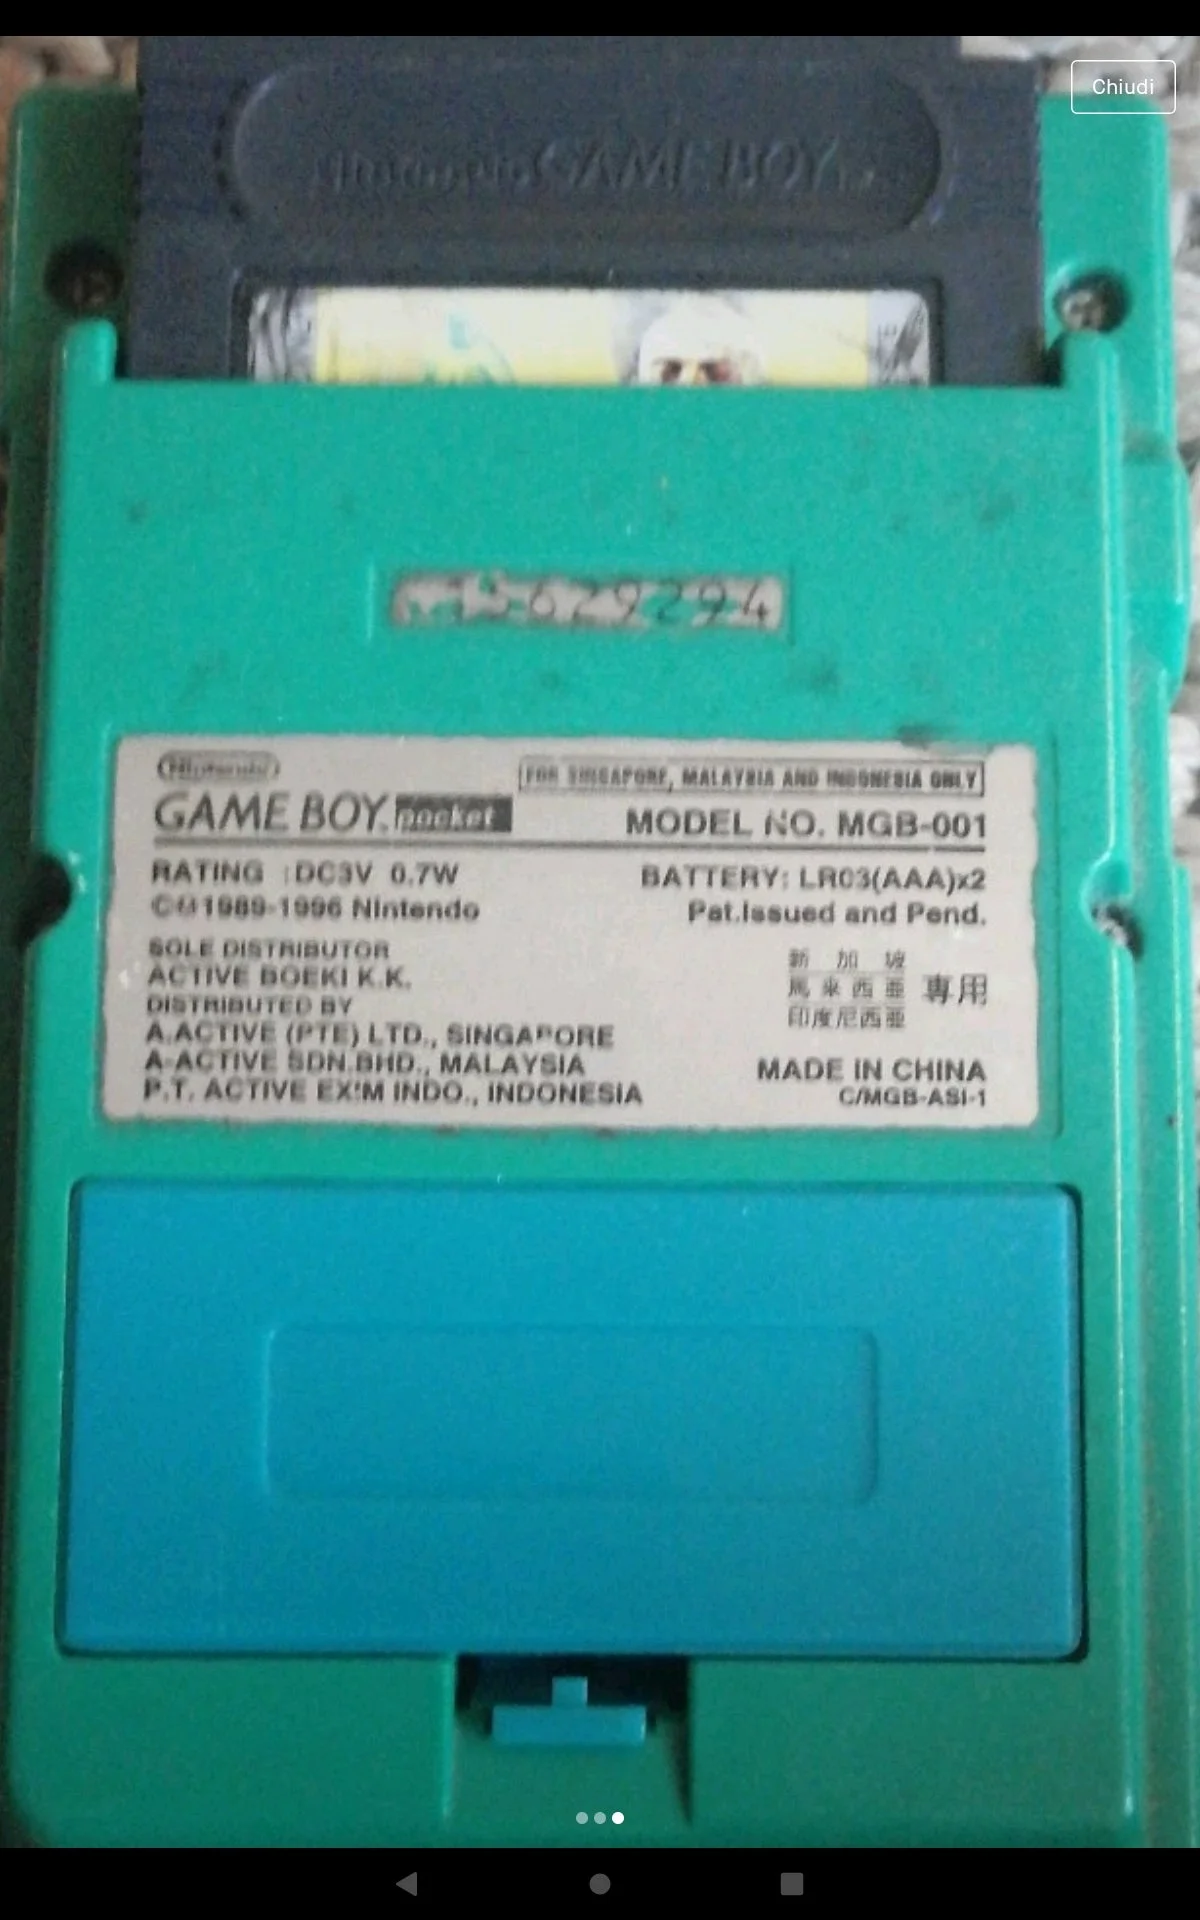  Nintendo Game Boy Pocket Green Console [SIJORI]